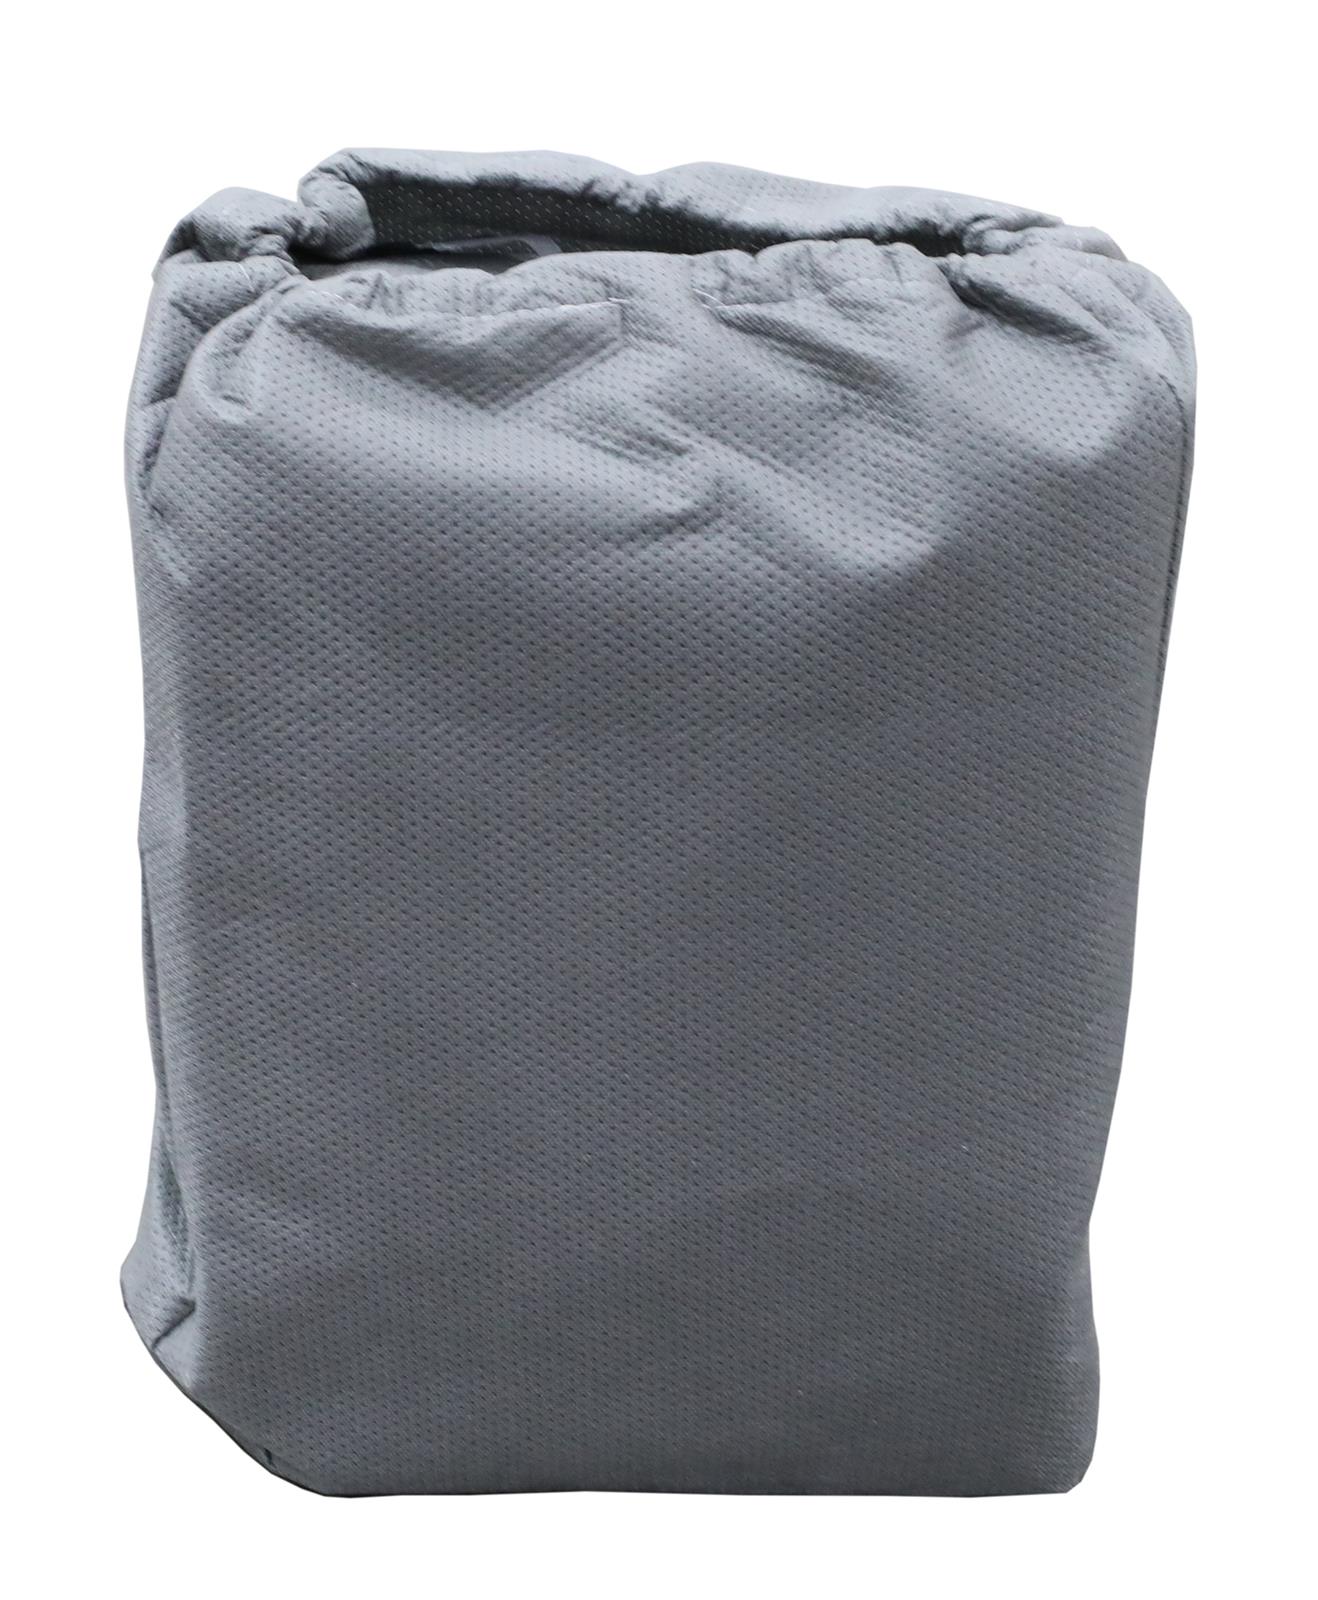 Rampage Backpack Purse Black Nylon NWT | eBay